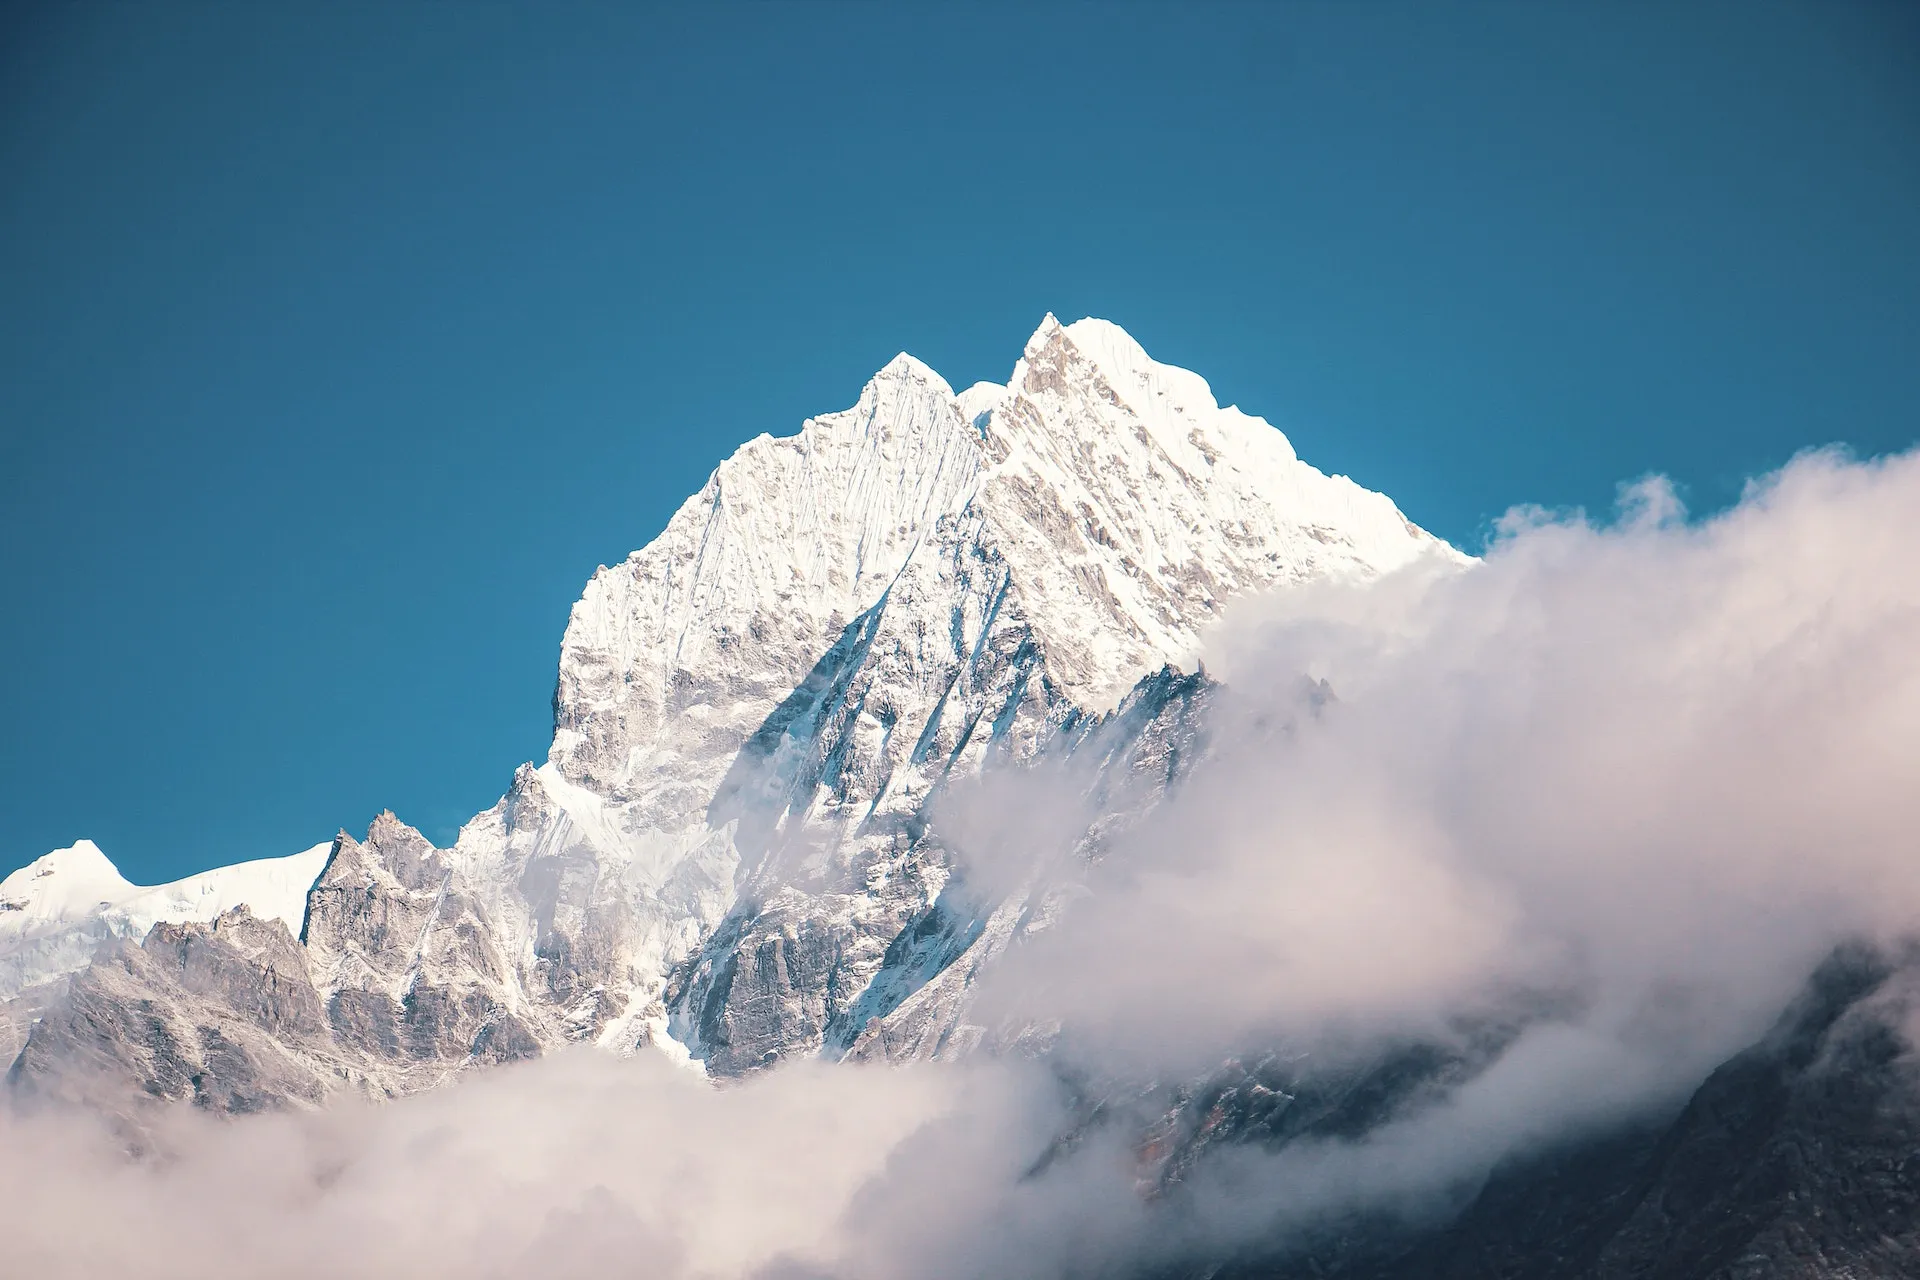 www.npl-nepal.com/himal view